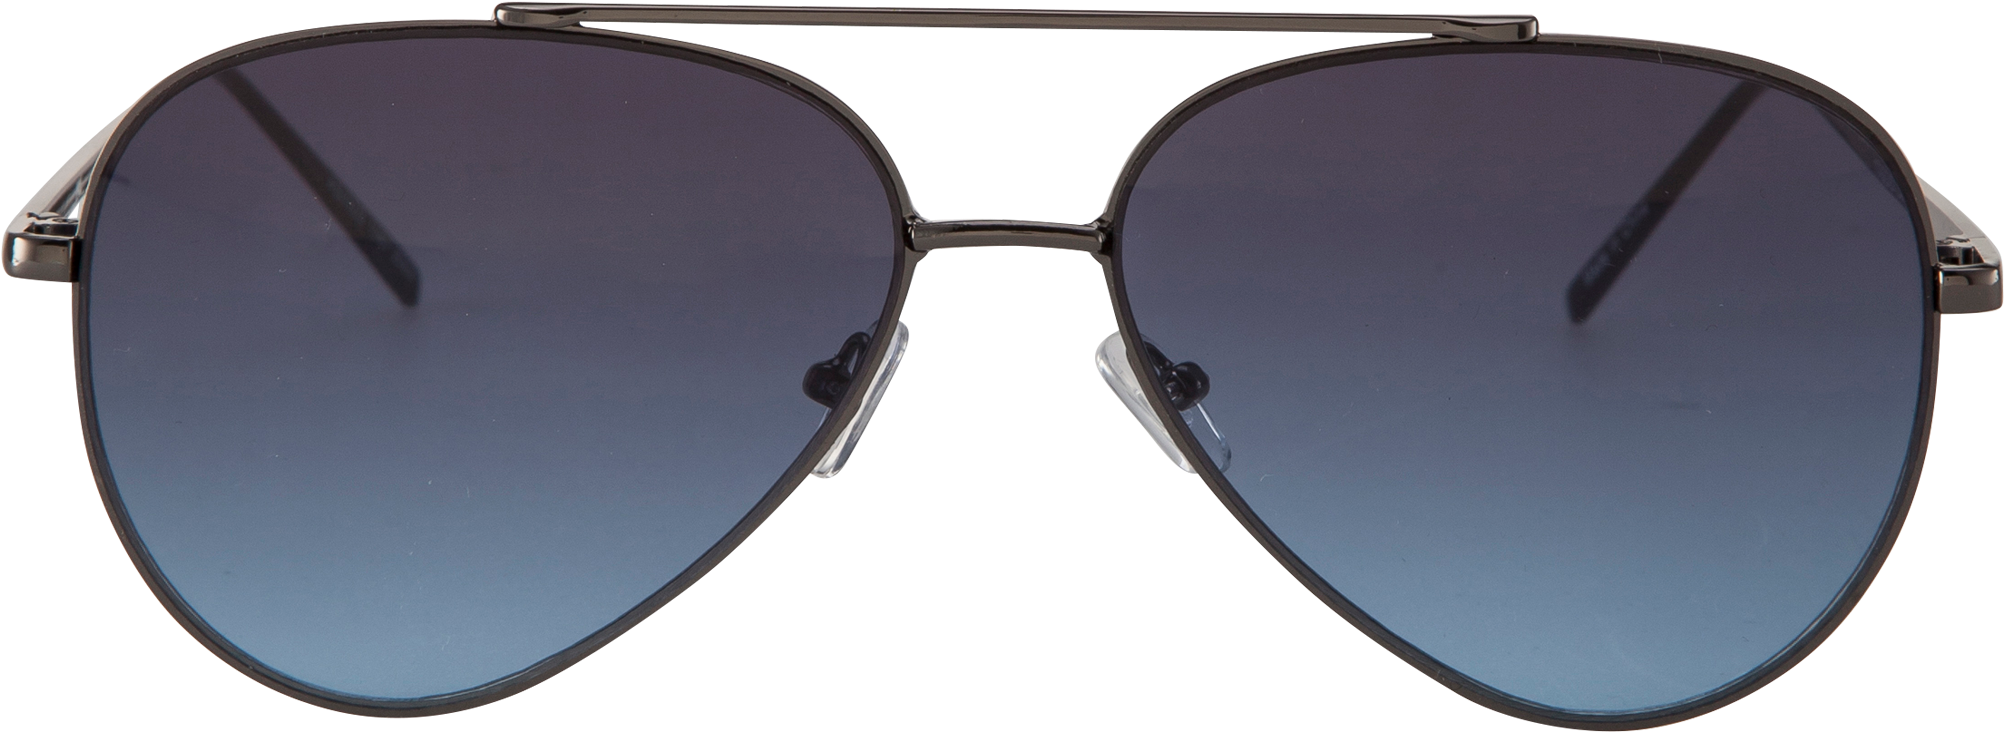 Black Maverick Aviator Sunglasses Reflection